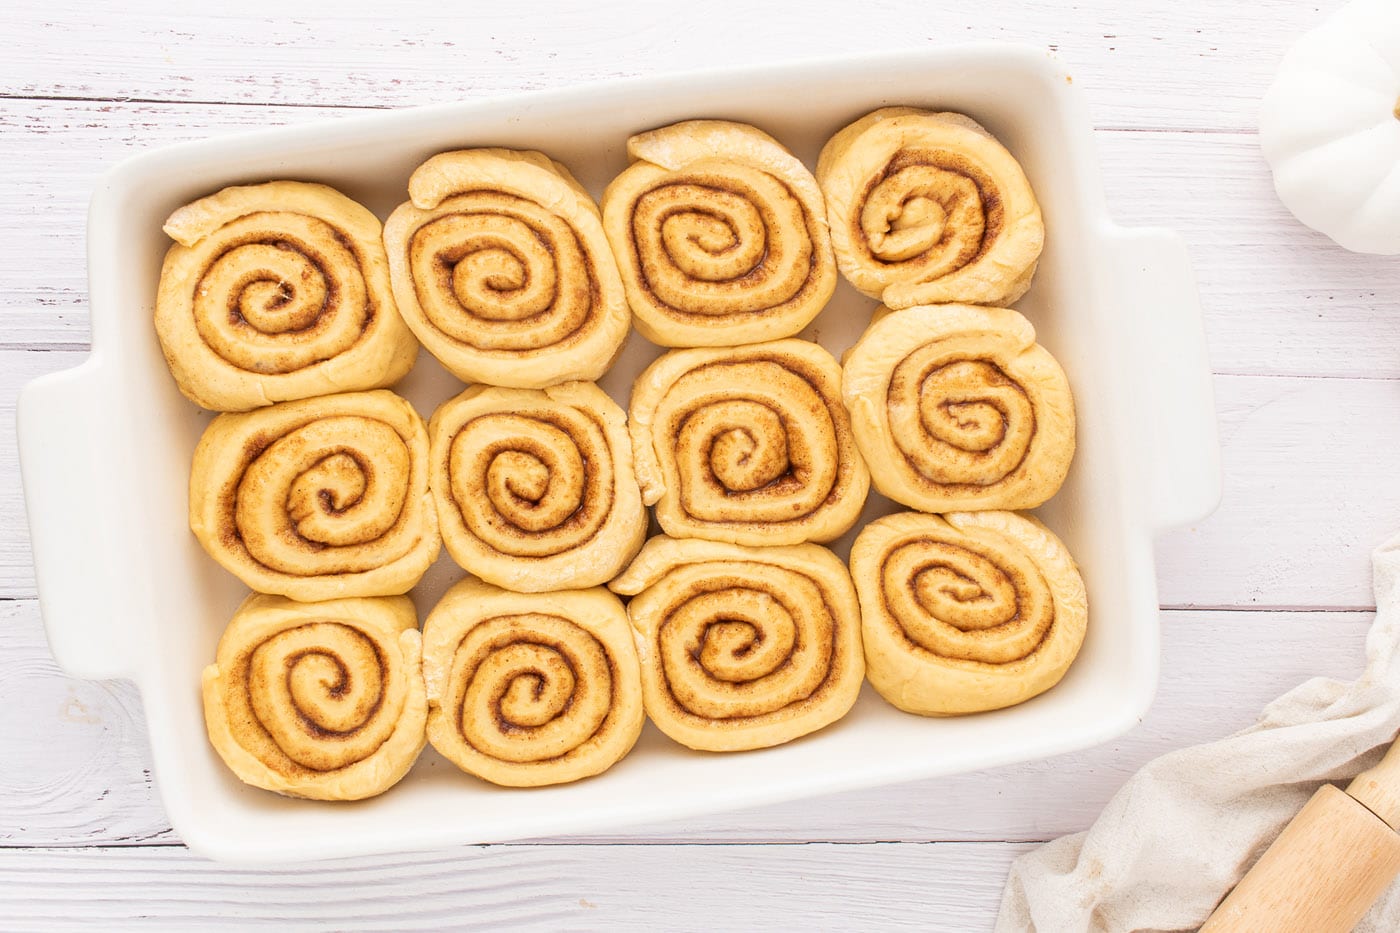 sliced cinnamon rolls in a baking pan